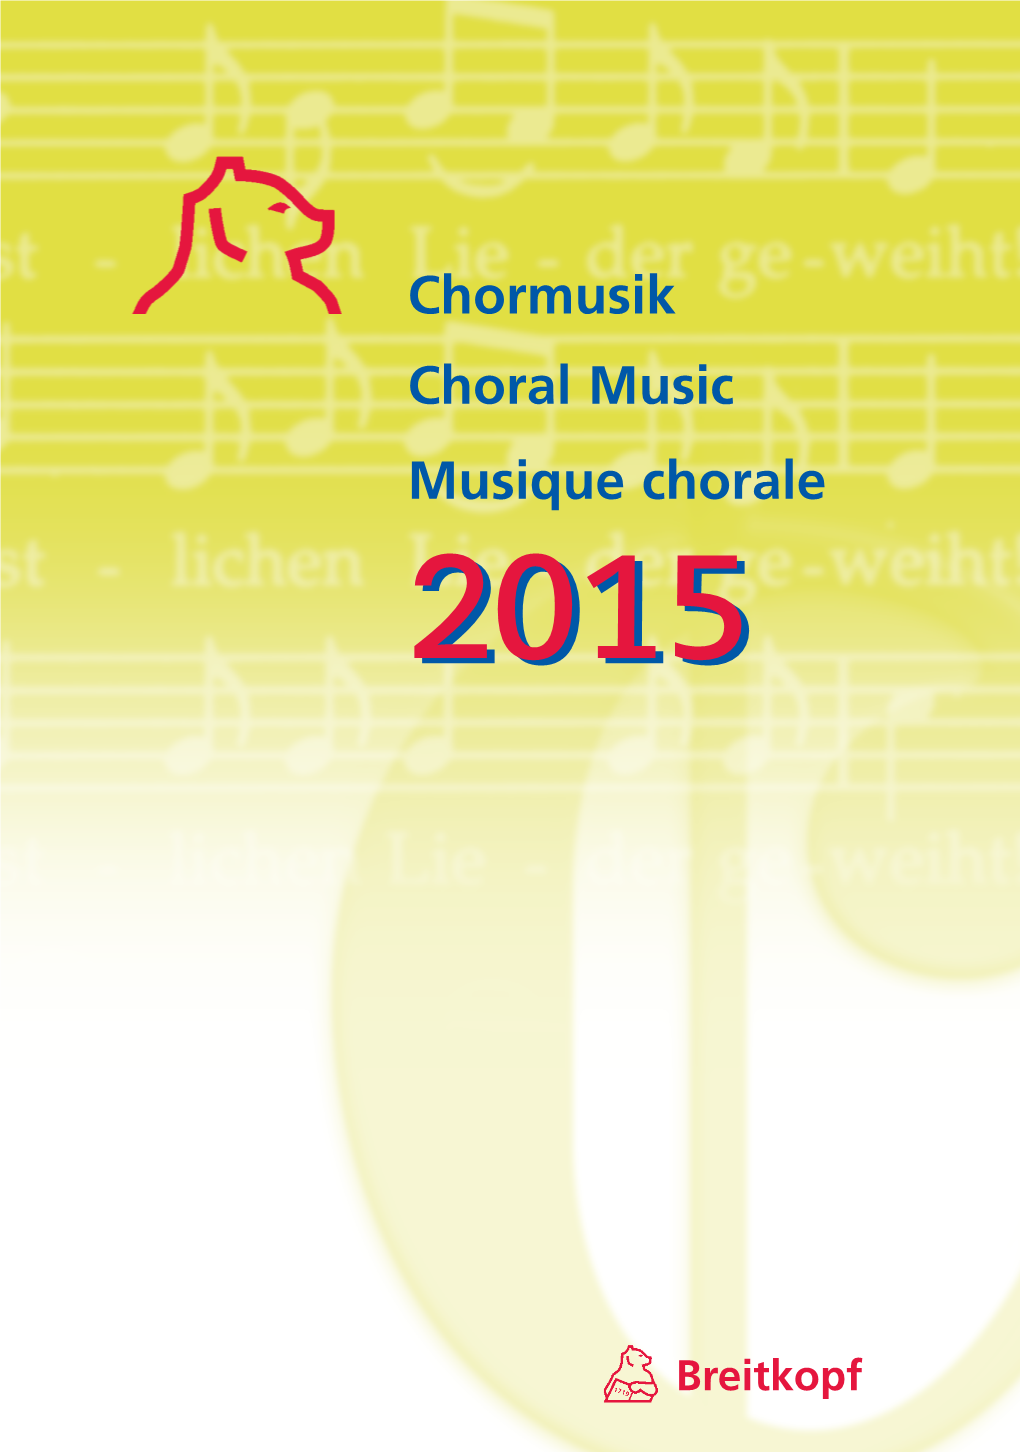 Chormusik Choral Music Musique Chorale